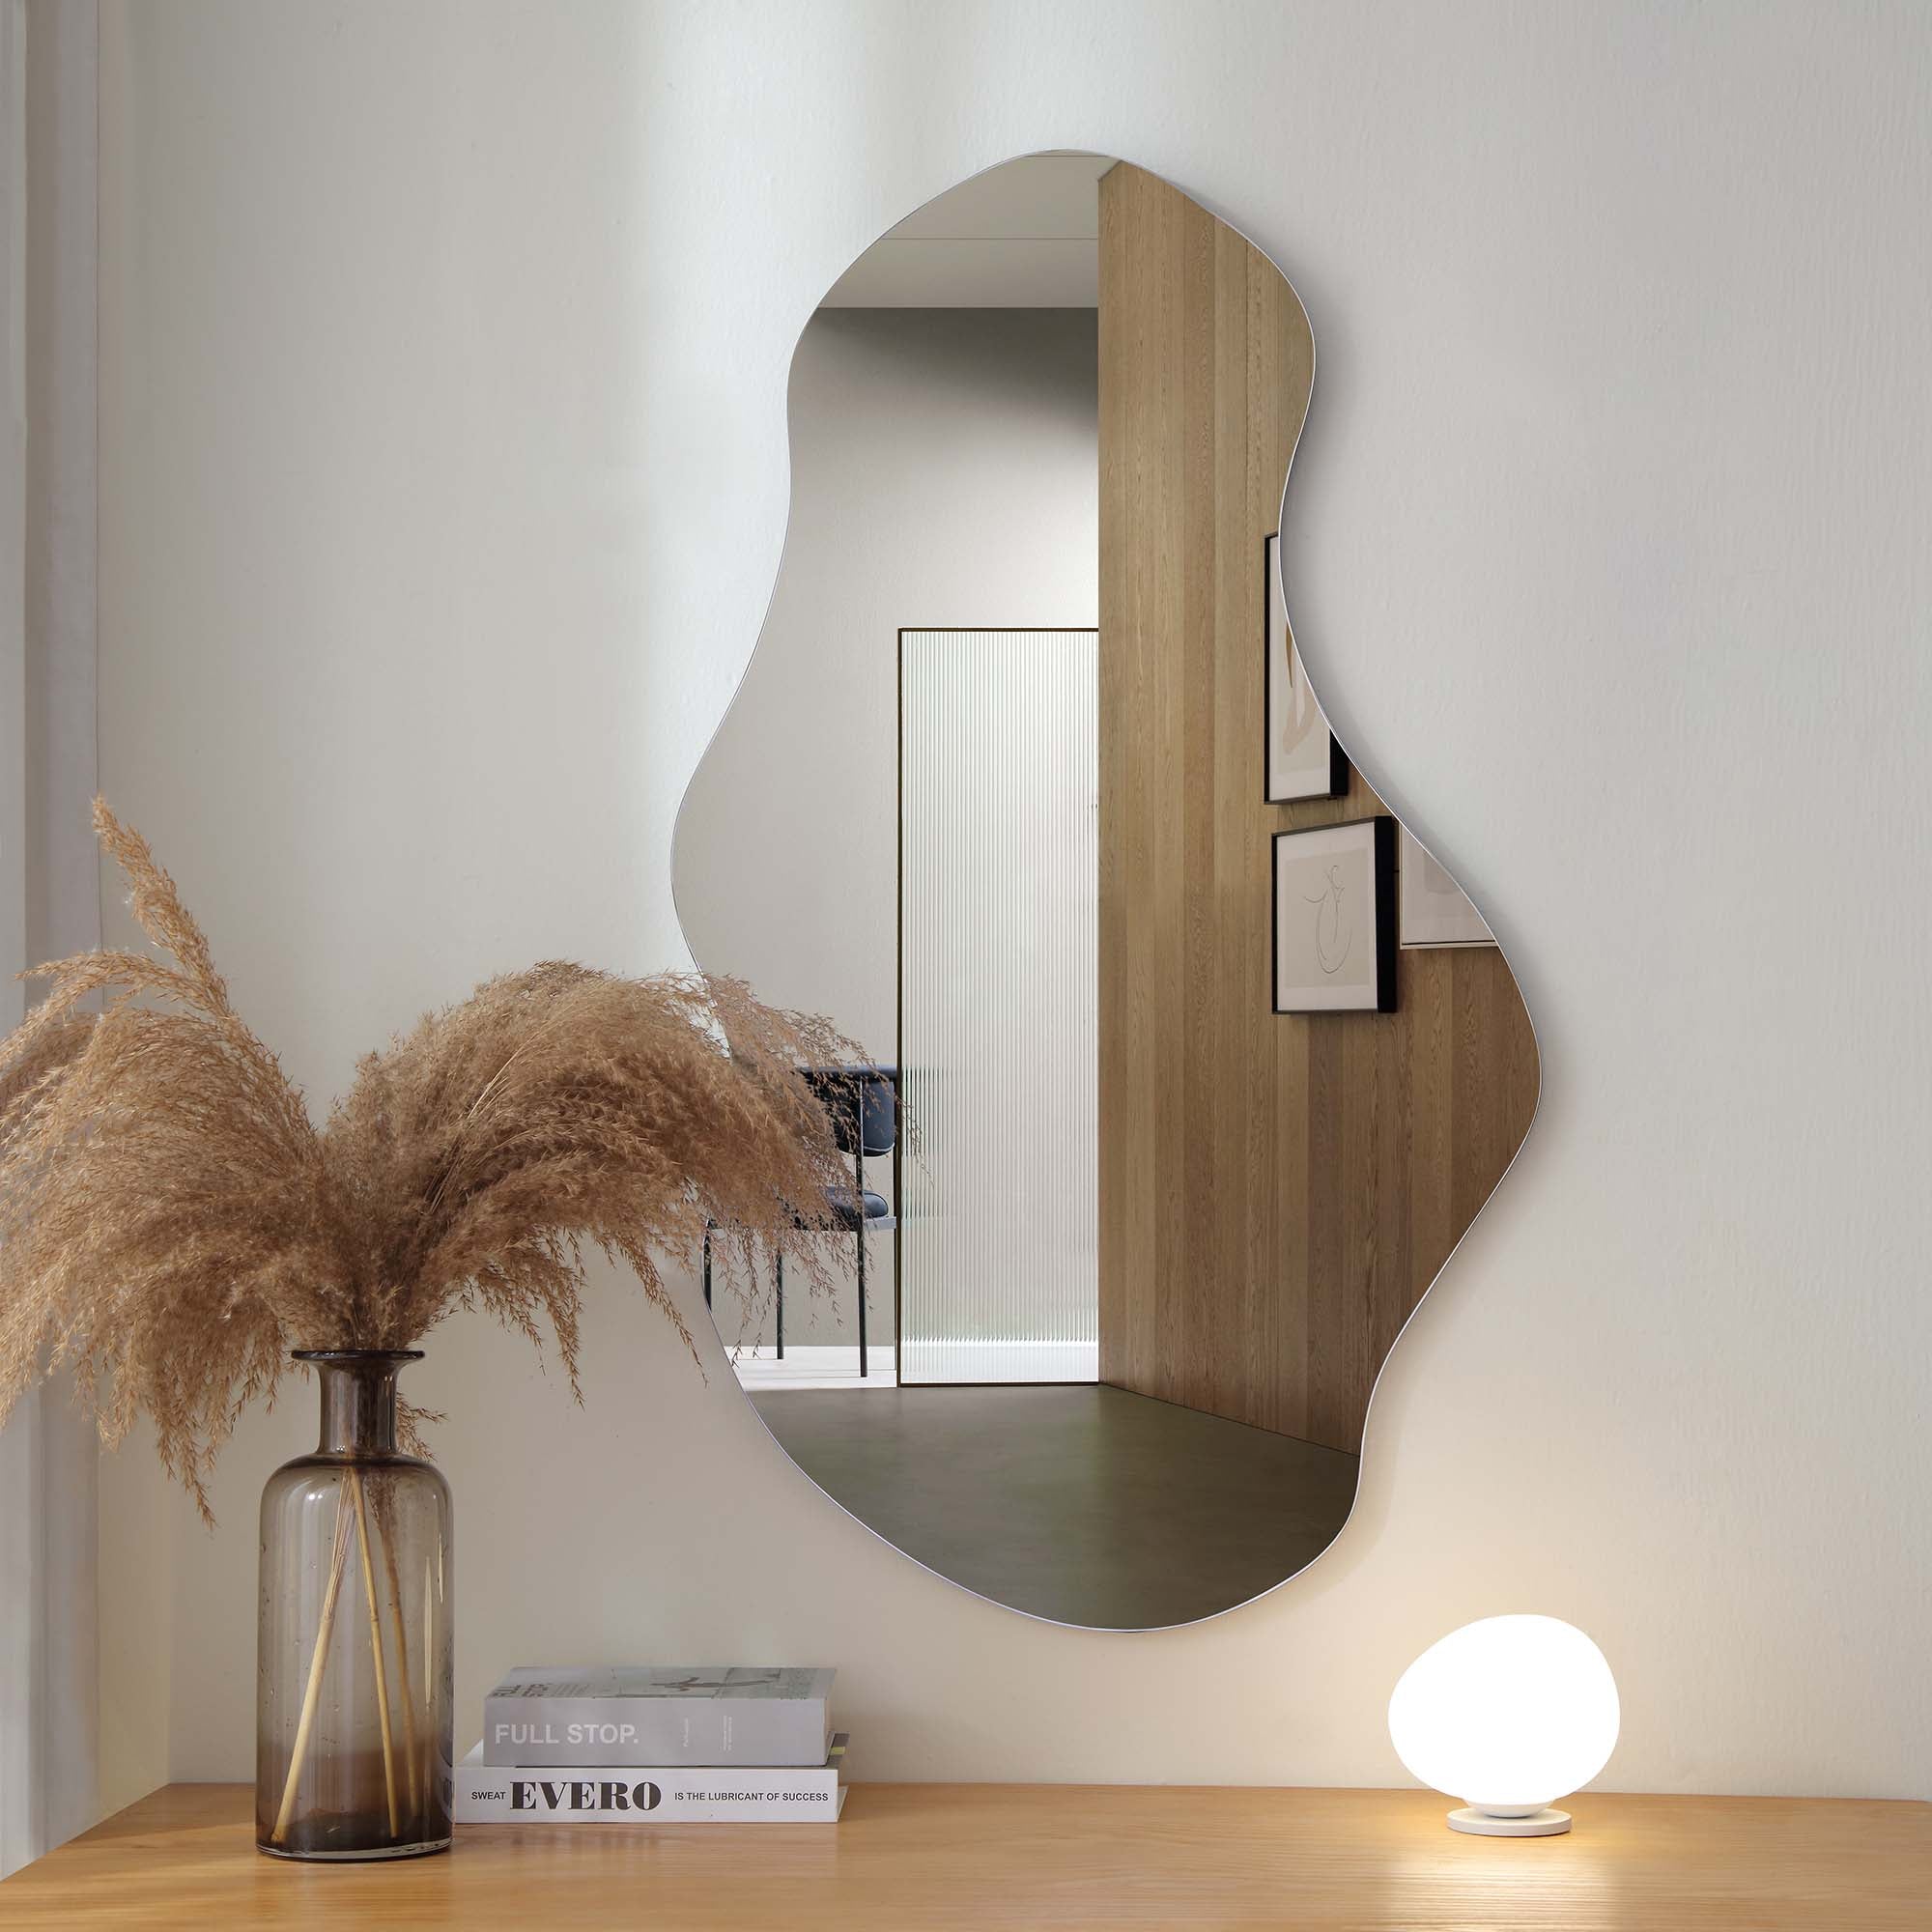 Bala Irregular Shaped Frameless Pond Mirror 100 x 60 cm